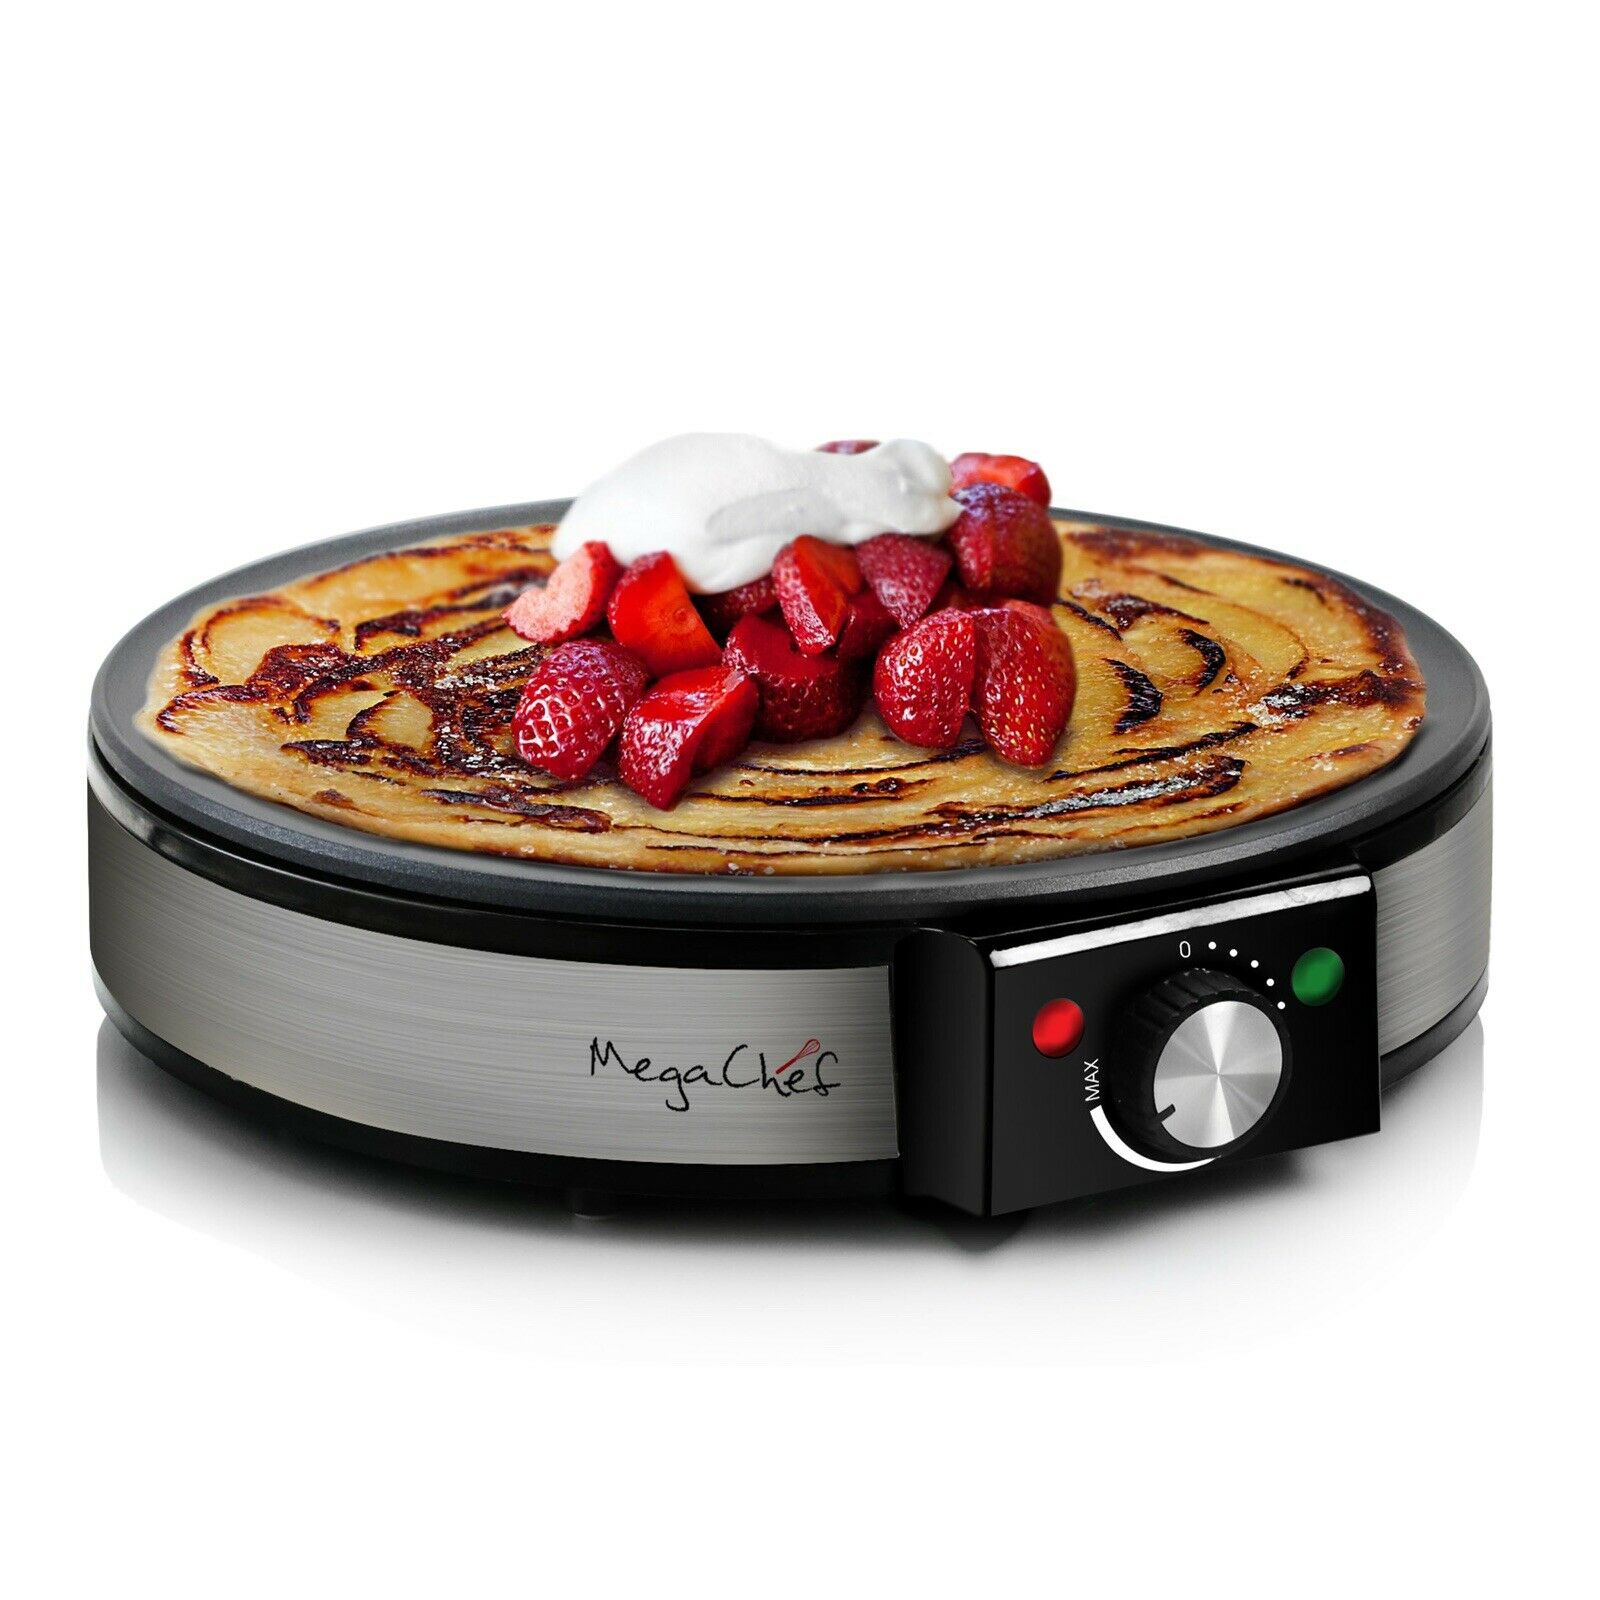 Megachef Stainless Steel ￼crepe/pancake Maker Breakfast Griddle, 12 In. Diameter